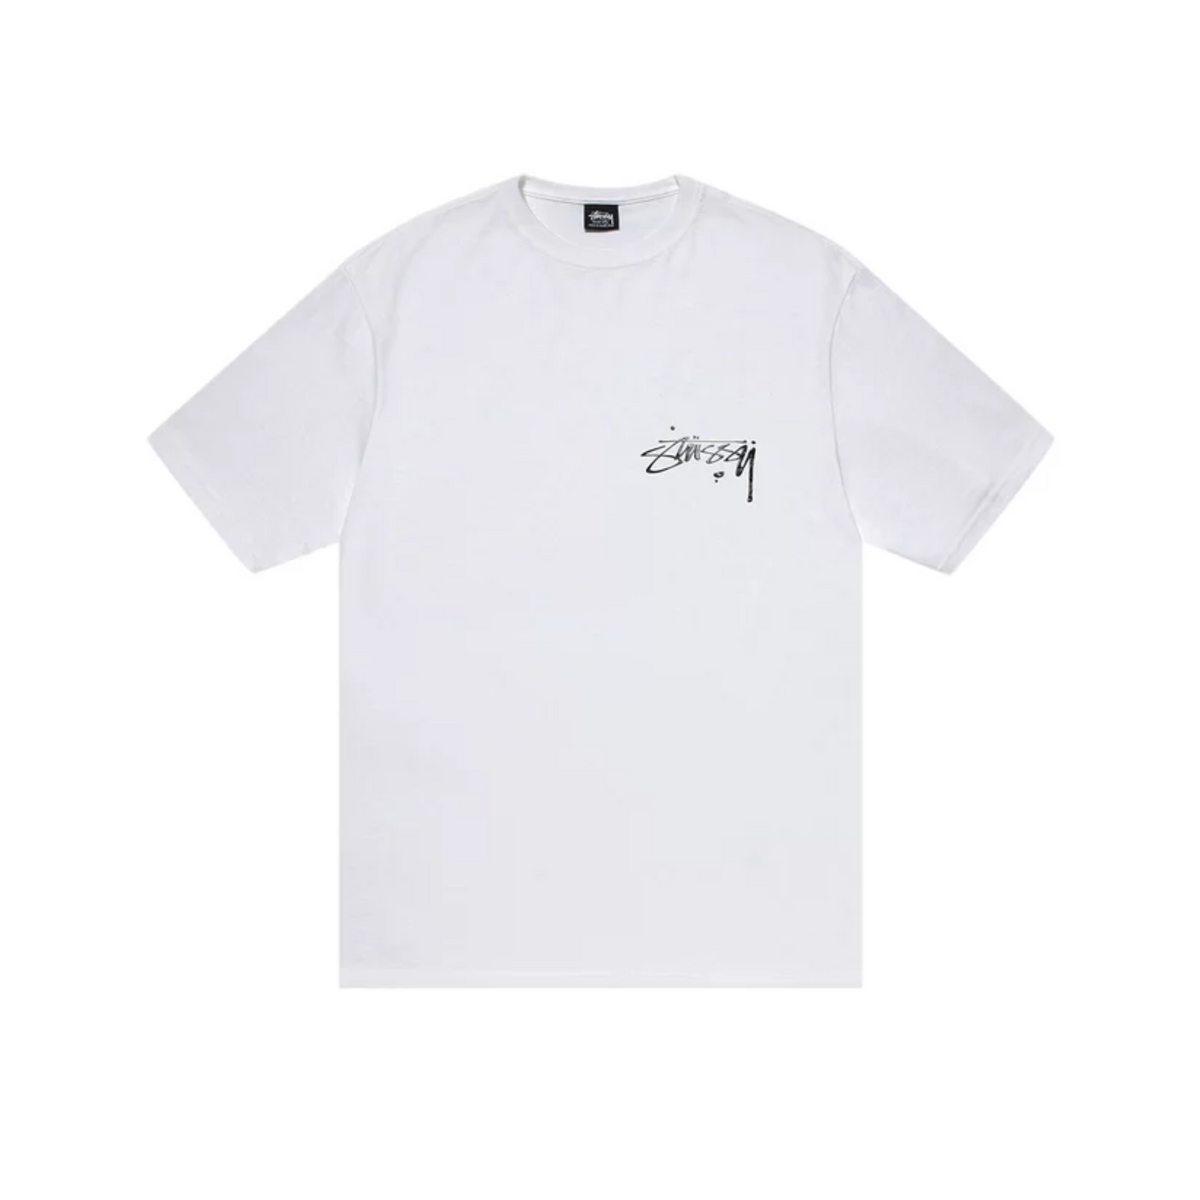 Stüssy Mercury T-Shirt "White"